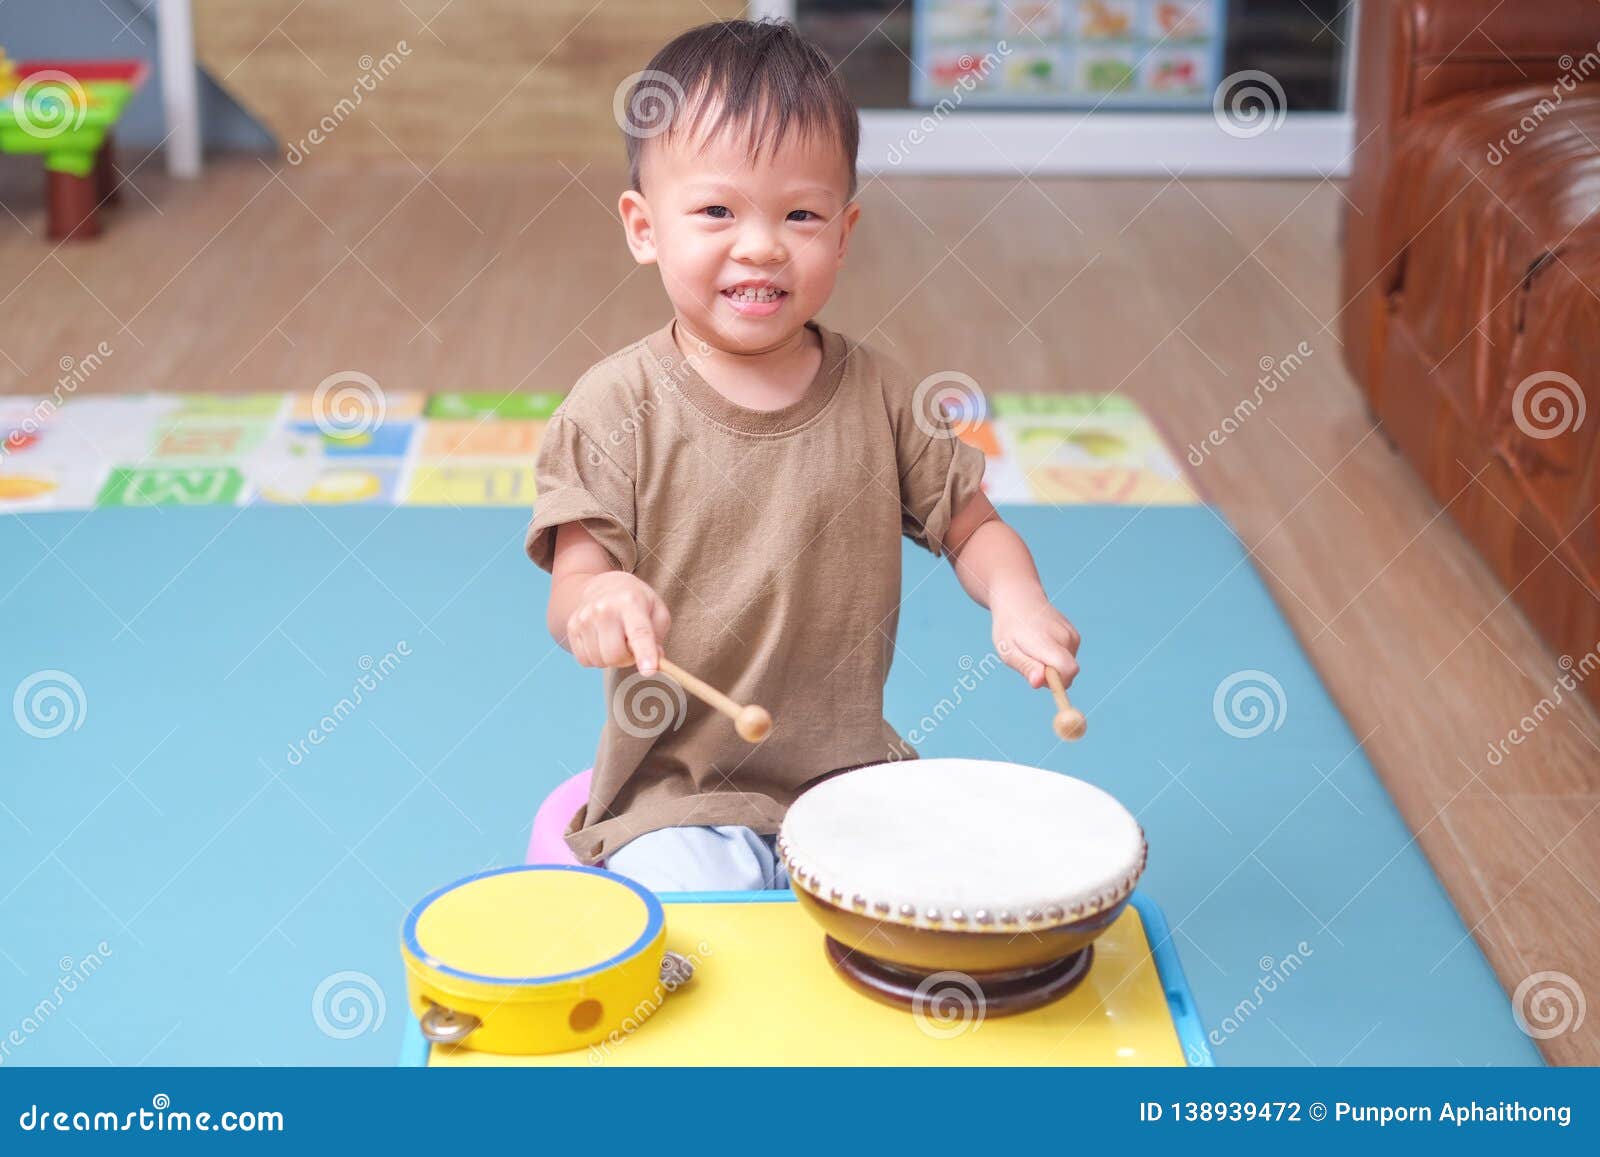 toddler baby boy child hold sticks & plays a musical instrument drum